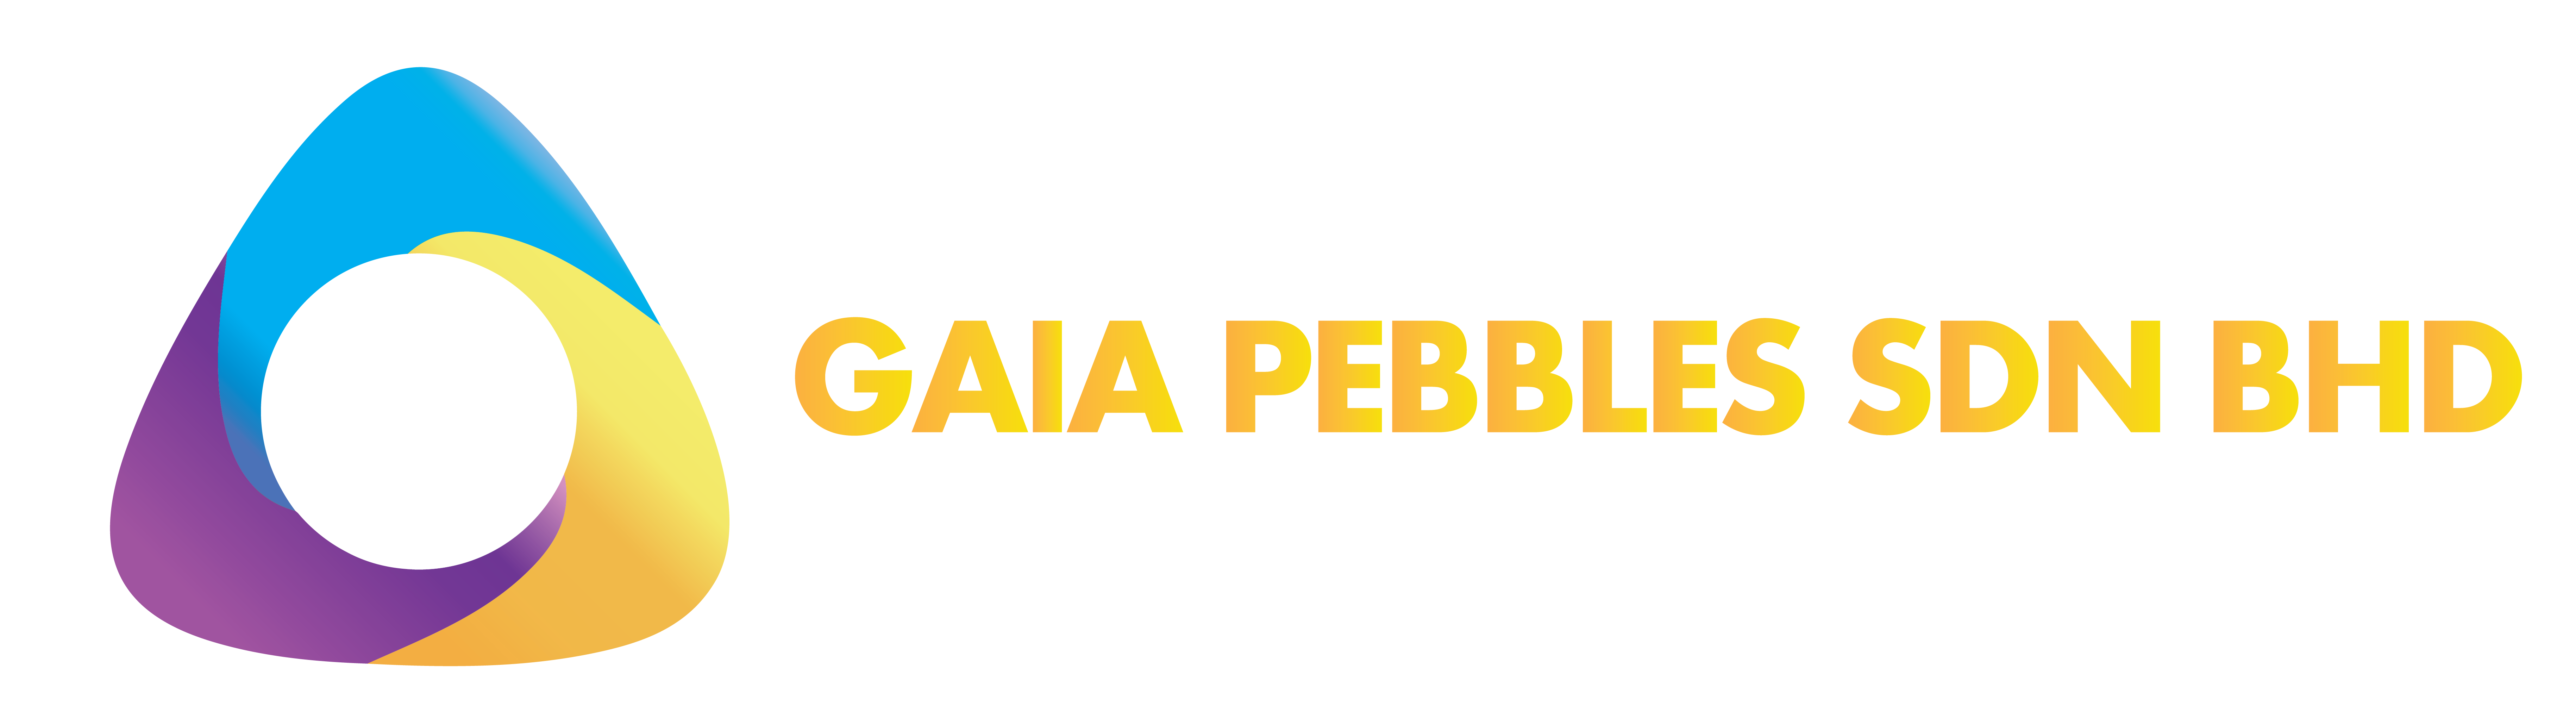 gaia pebbles logo